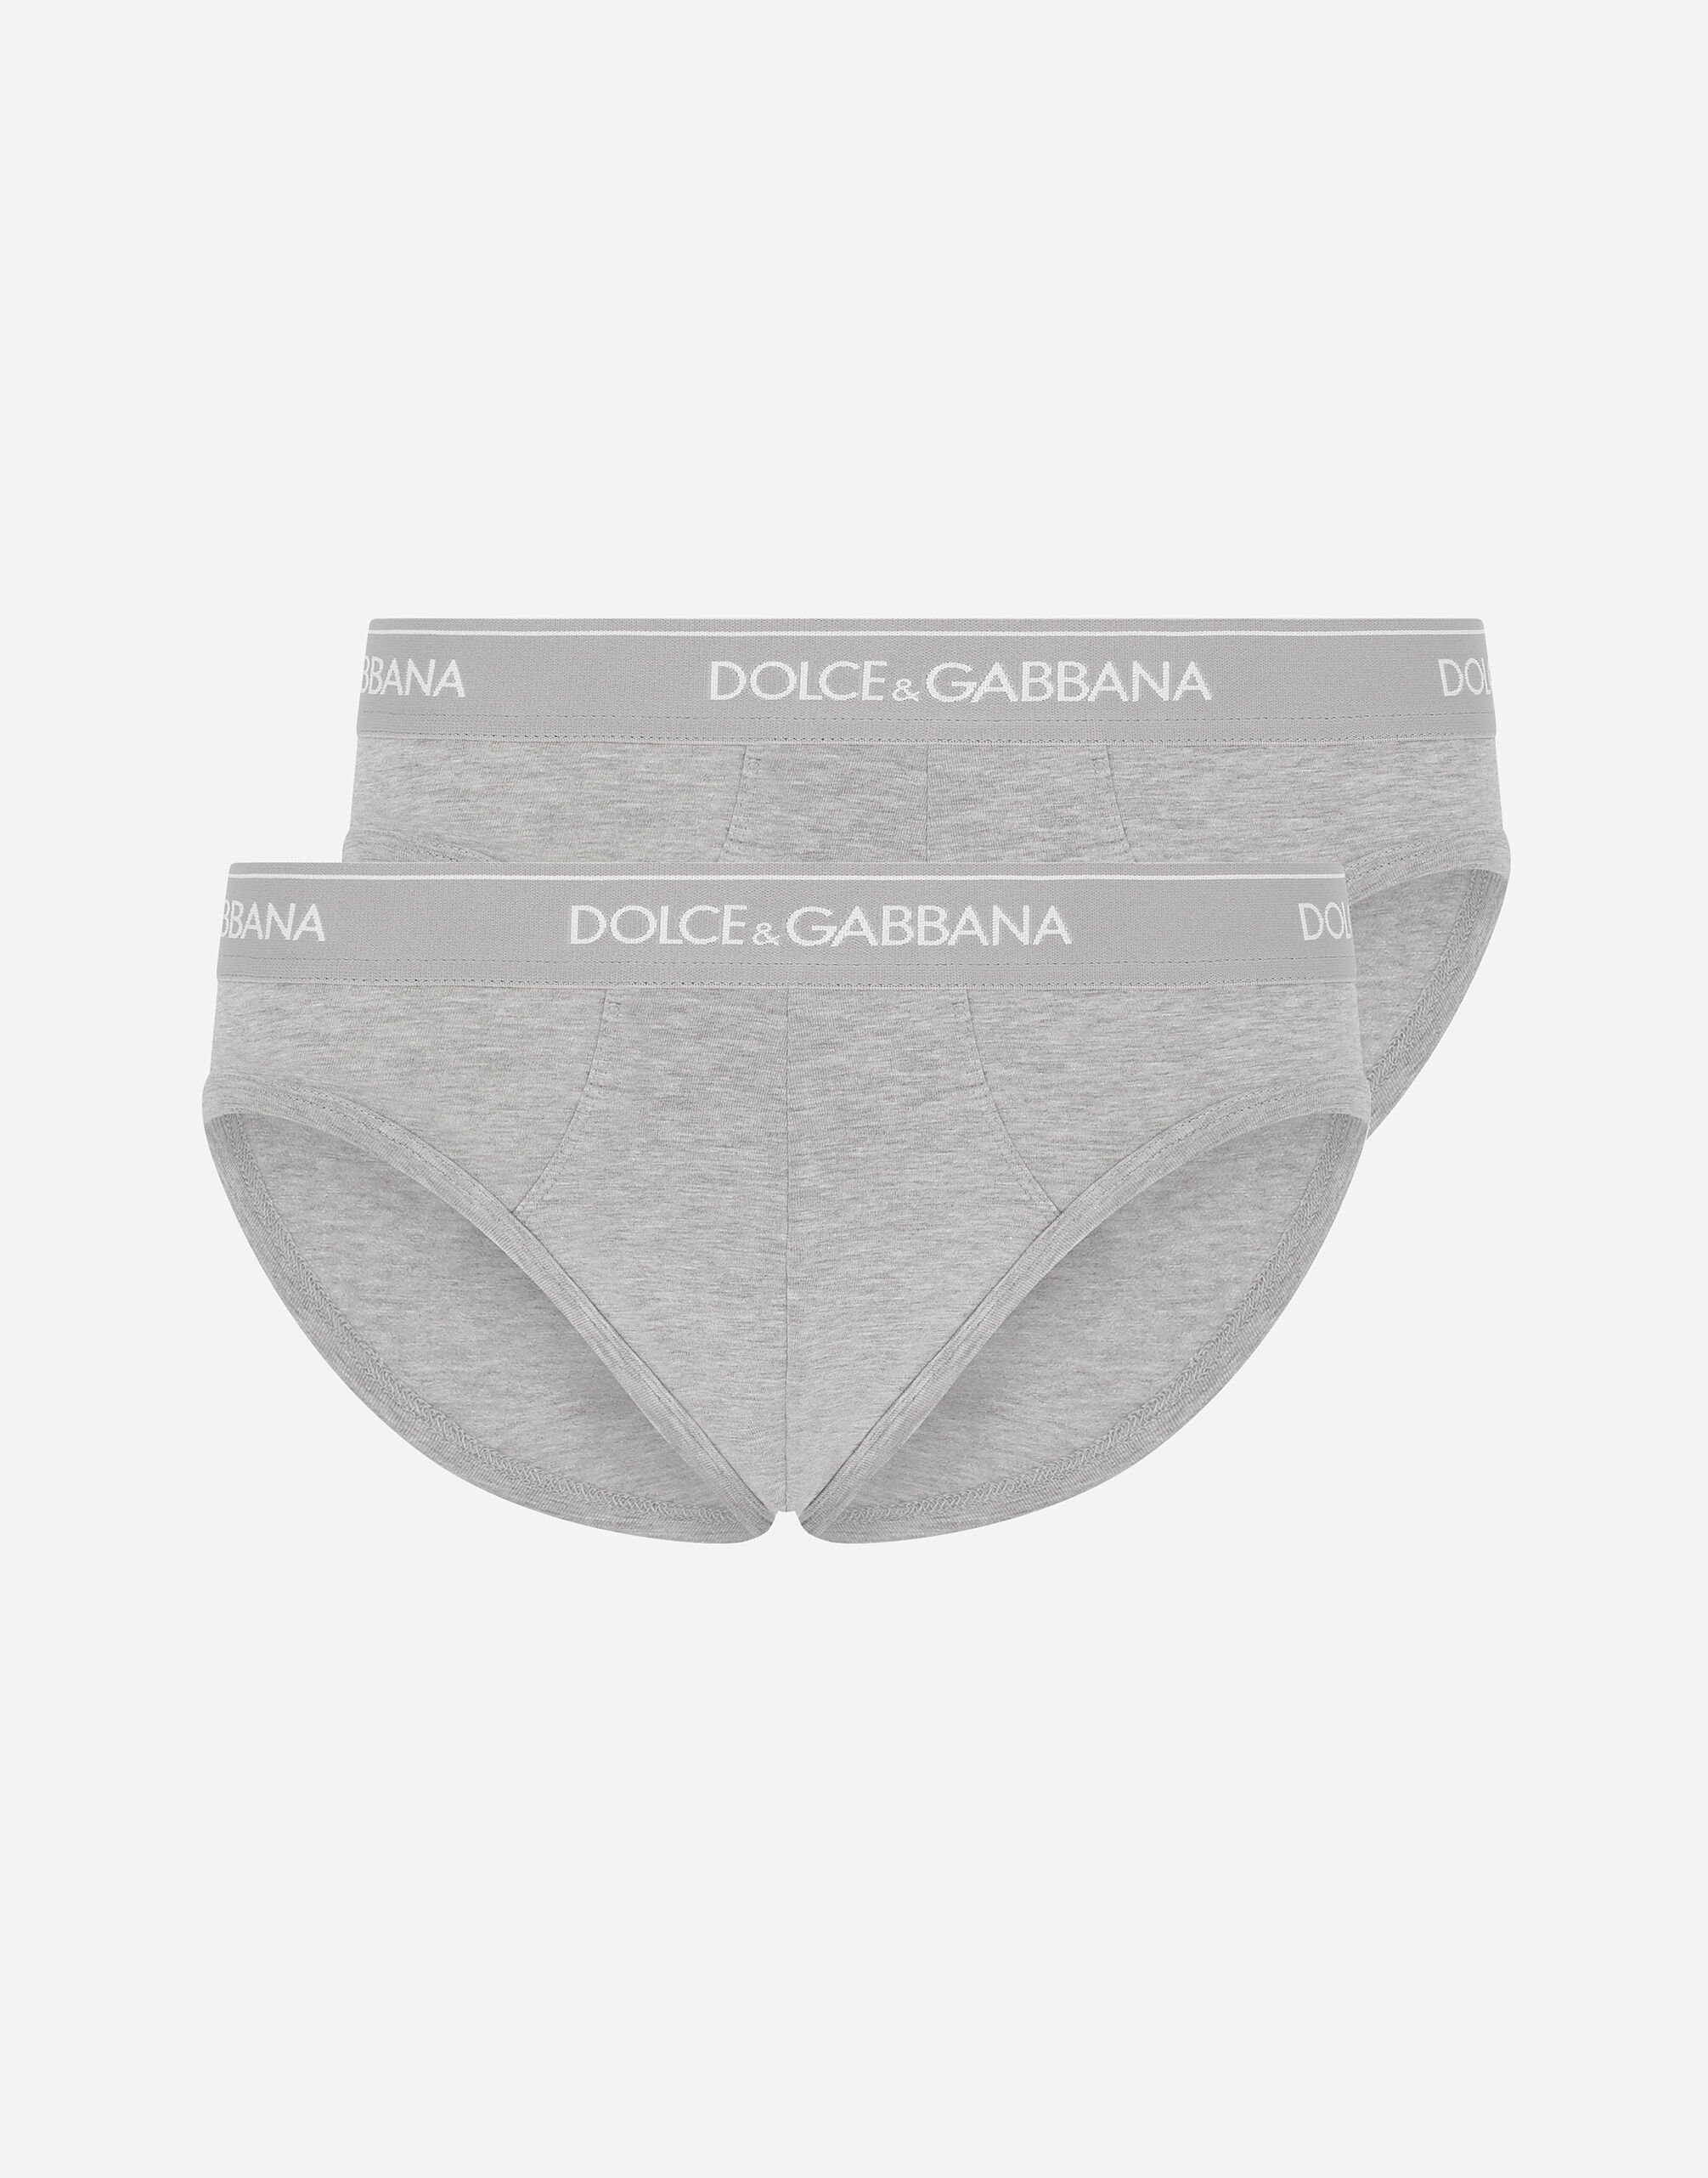 Dolce & Gabbana Stretch cotton mid-rise briefs two pack Black M9C03JONN95